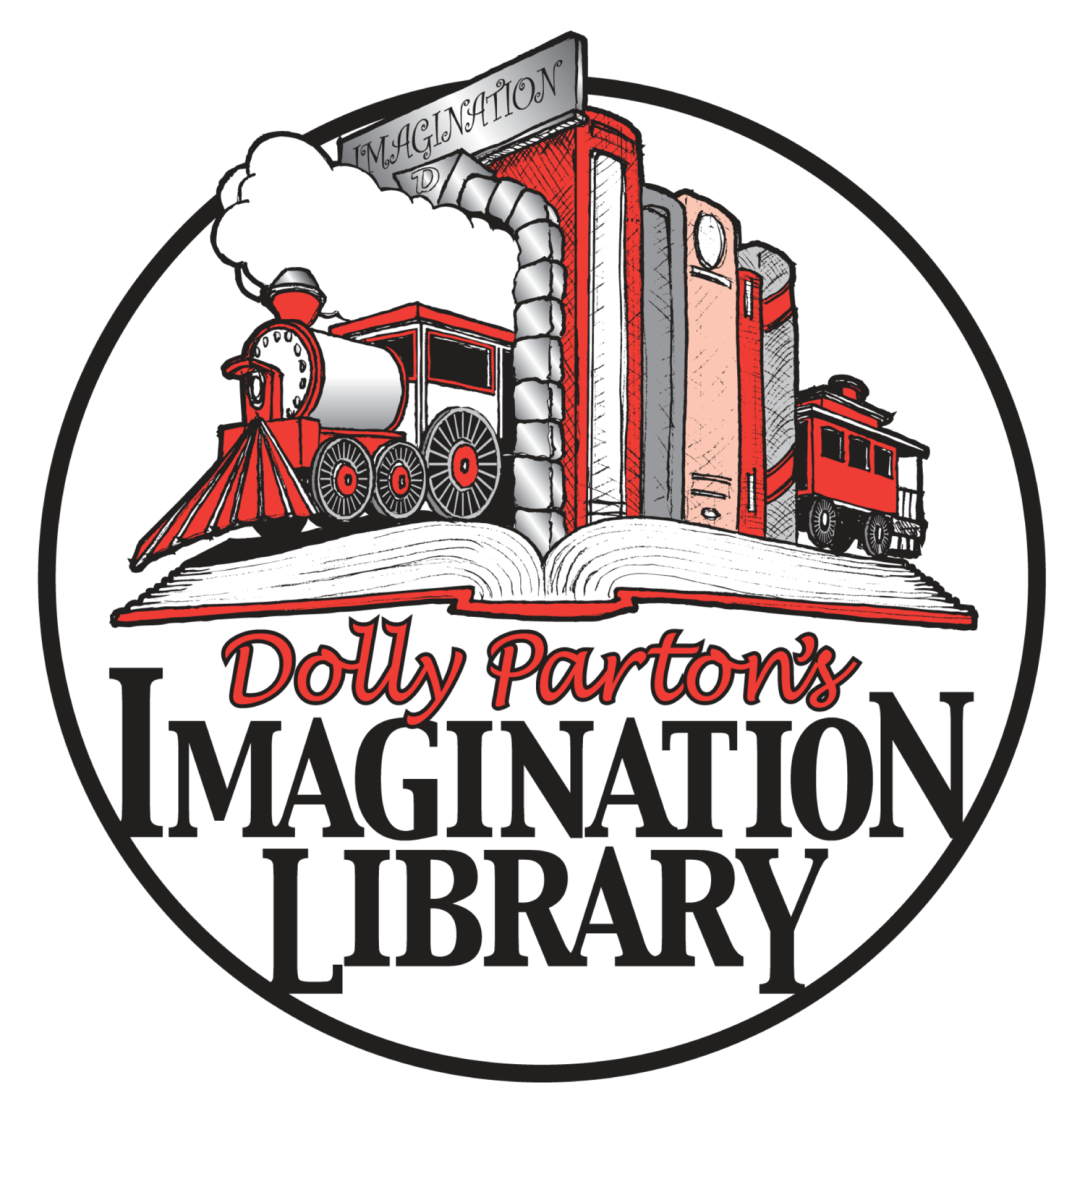 Dolly Parton's Imagination Library logo.